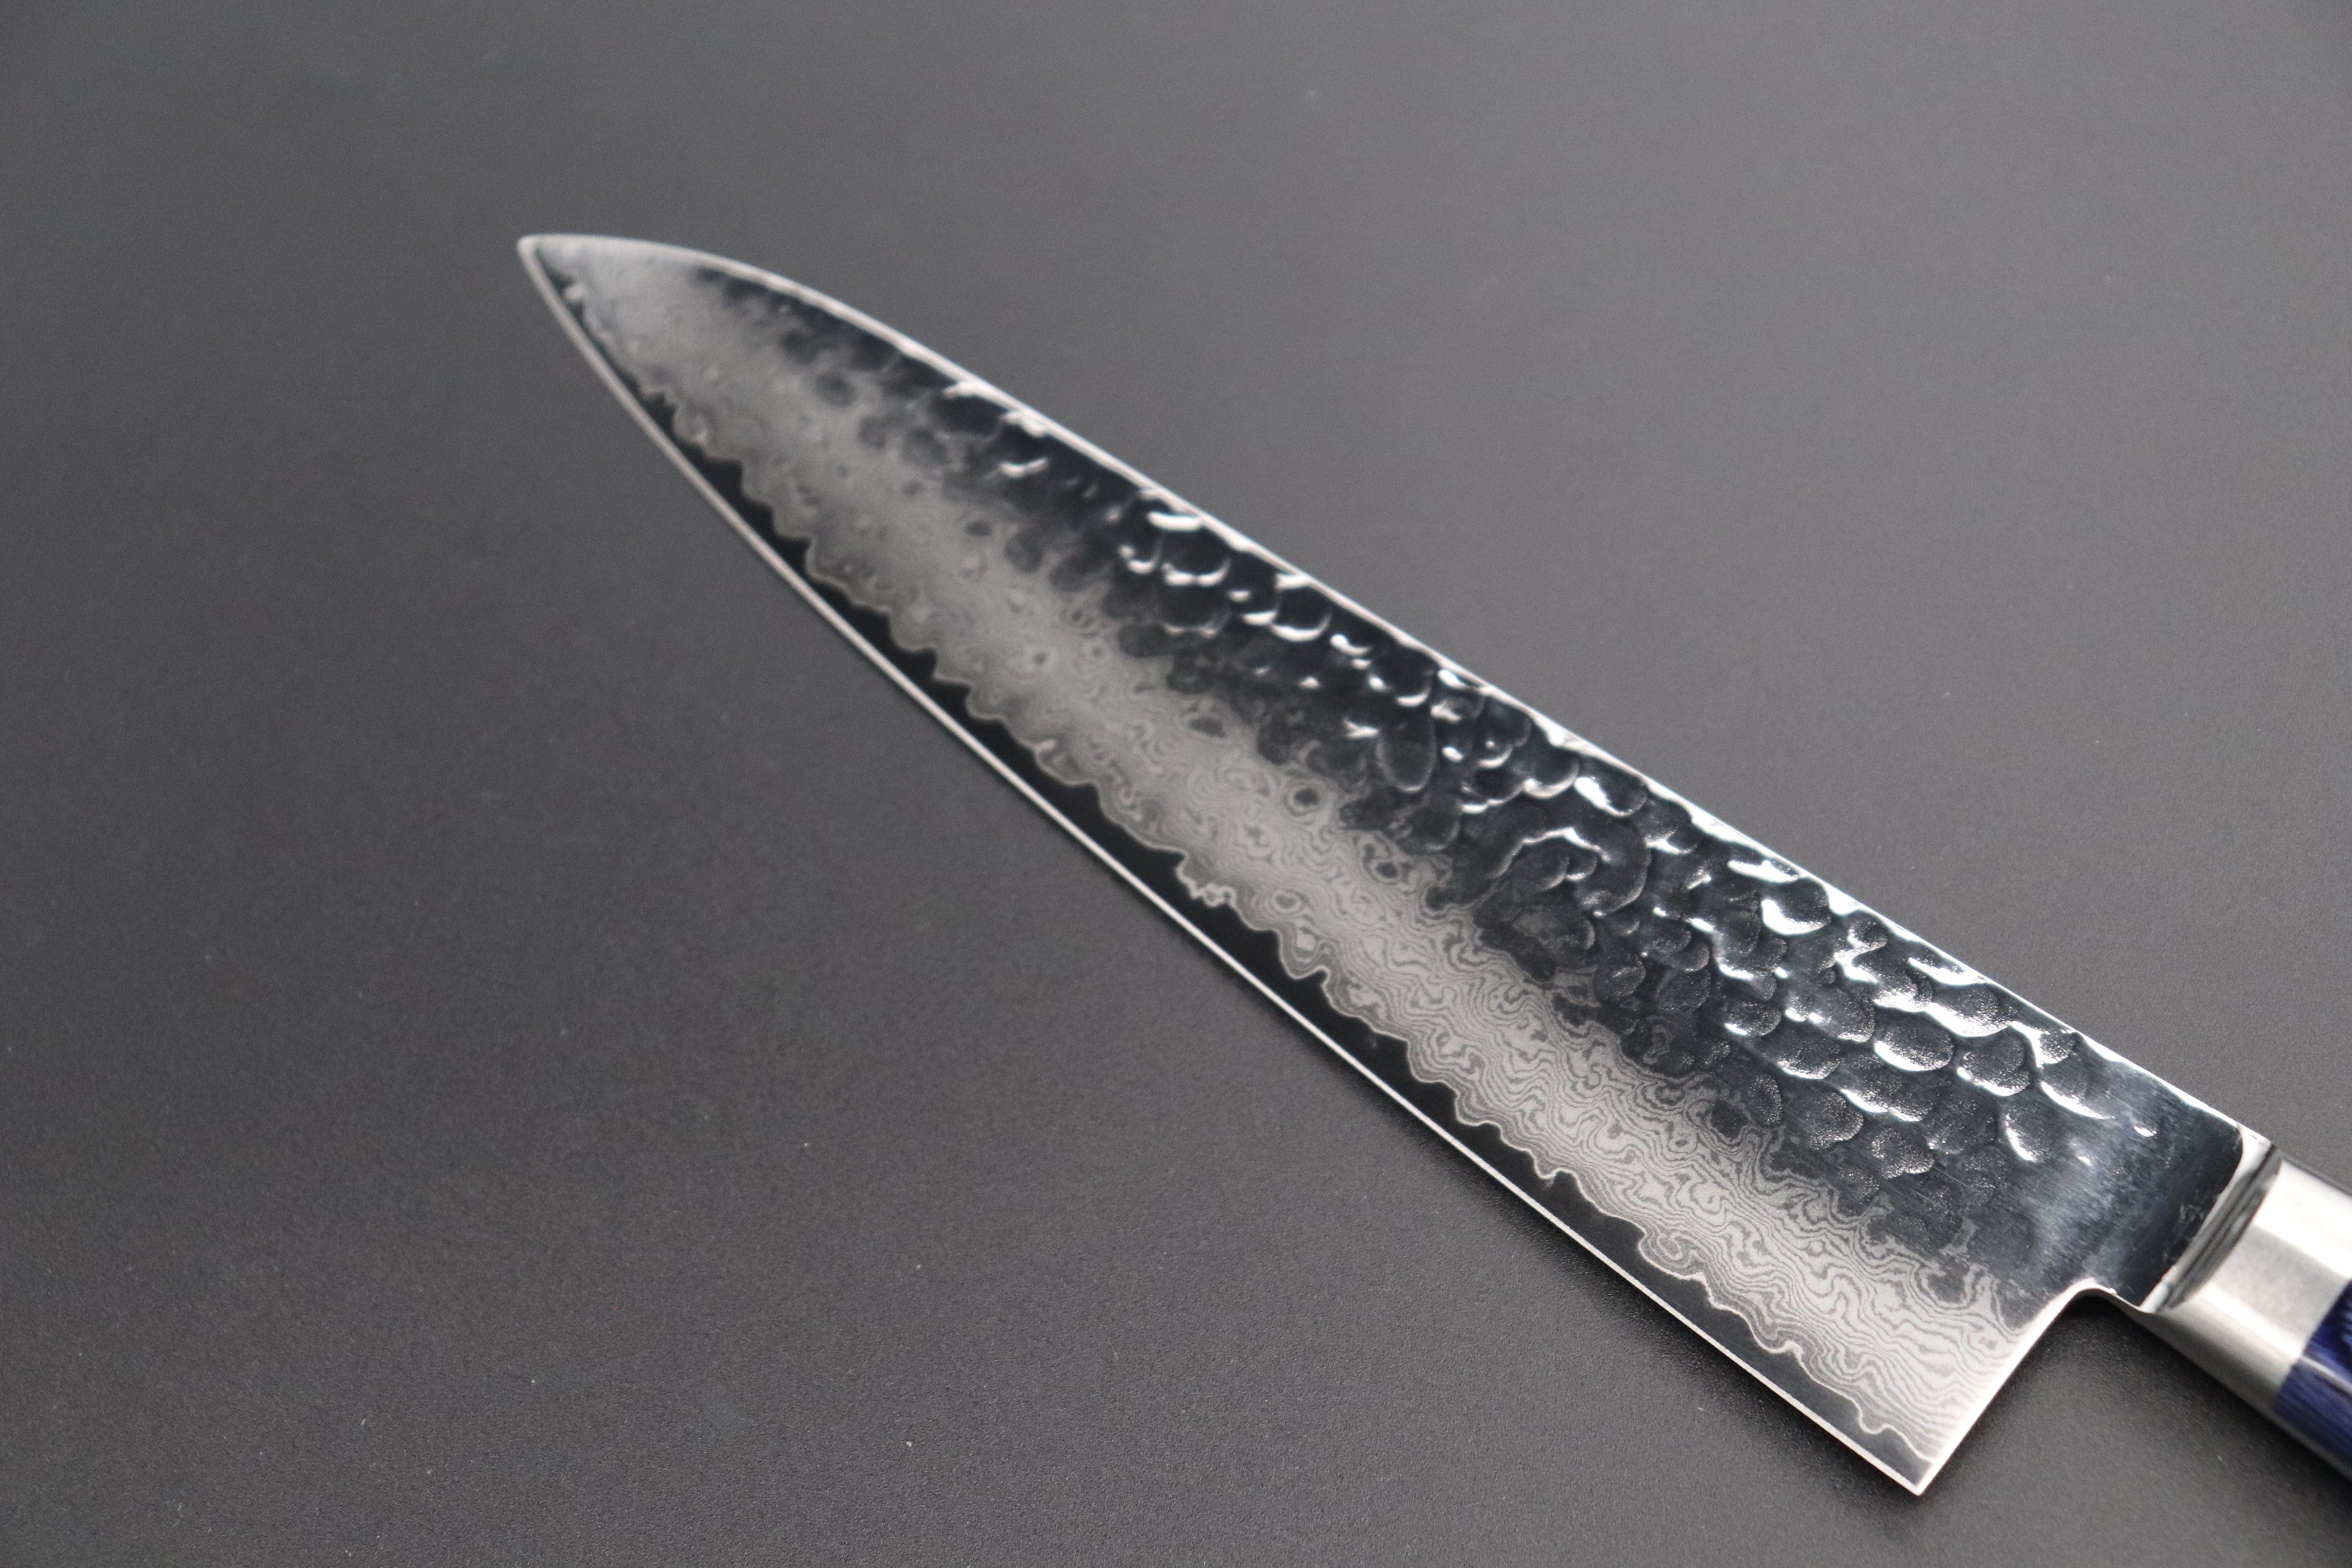 8 Inch Wide Blade Hammered AUS-10 Damascus Steel Chef's Knife